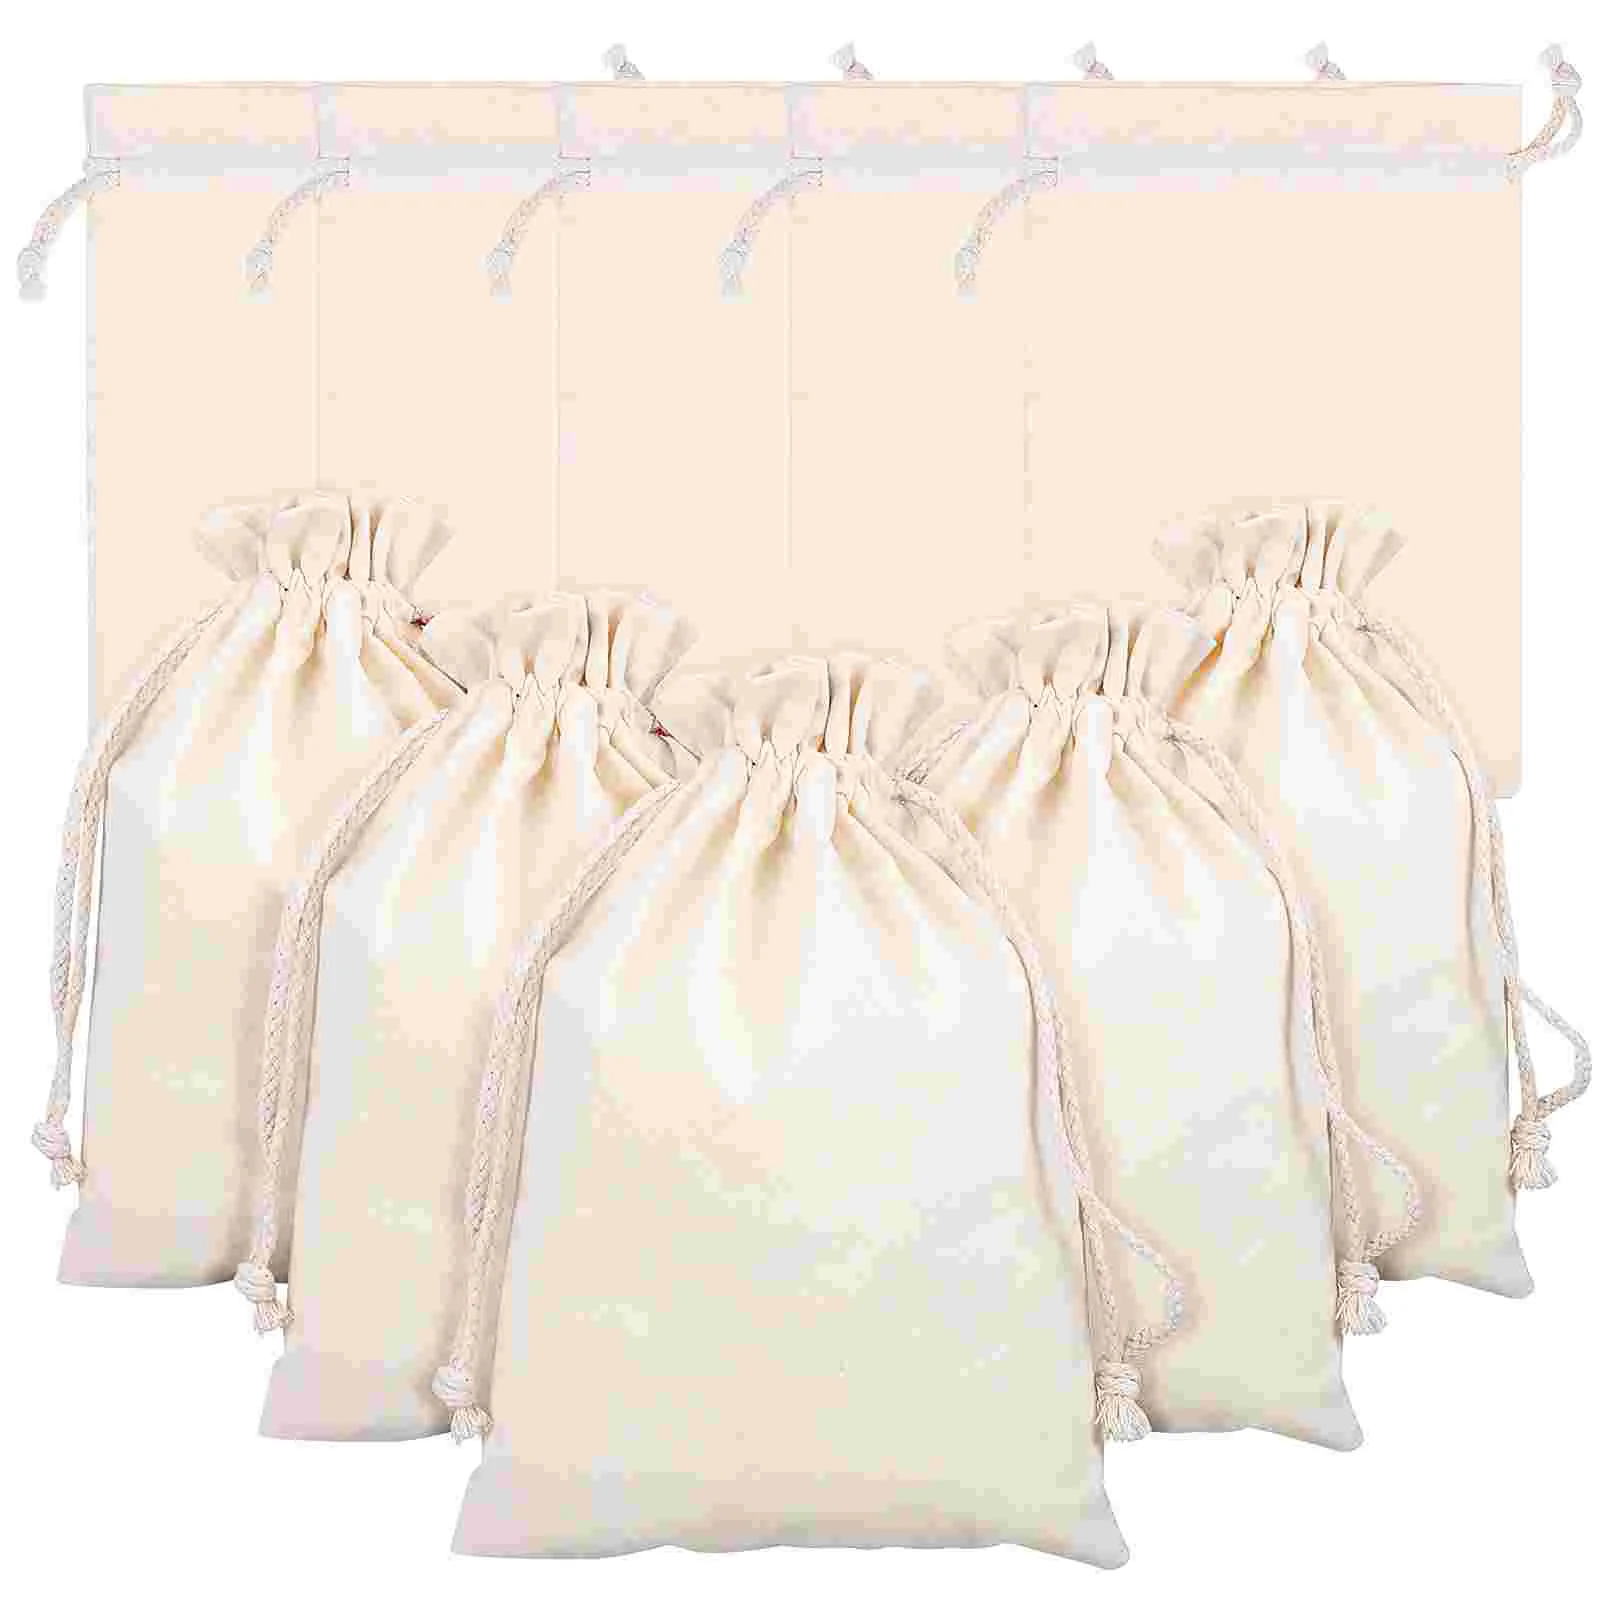 

Cotton Cloth Bags Drawstring Reusable Muslin Bag Portable Storage Bags Blank Cotton Bundle Pocket